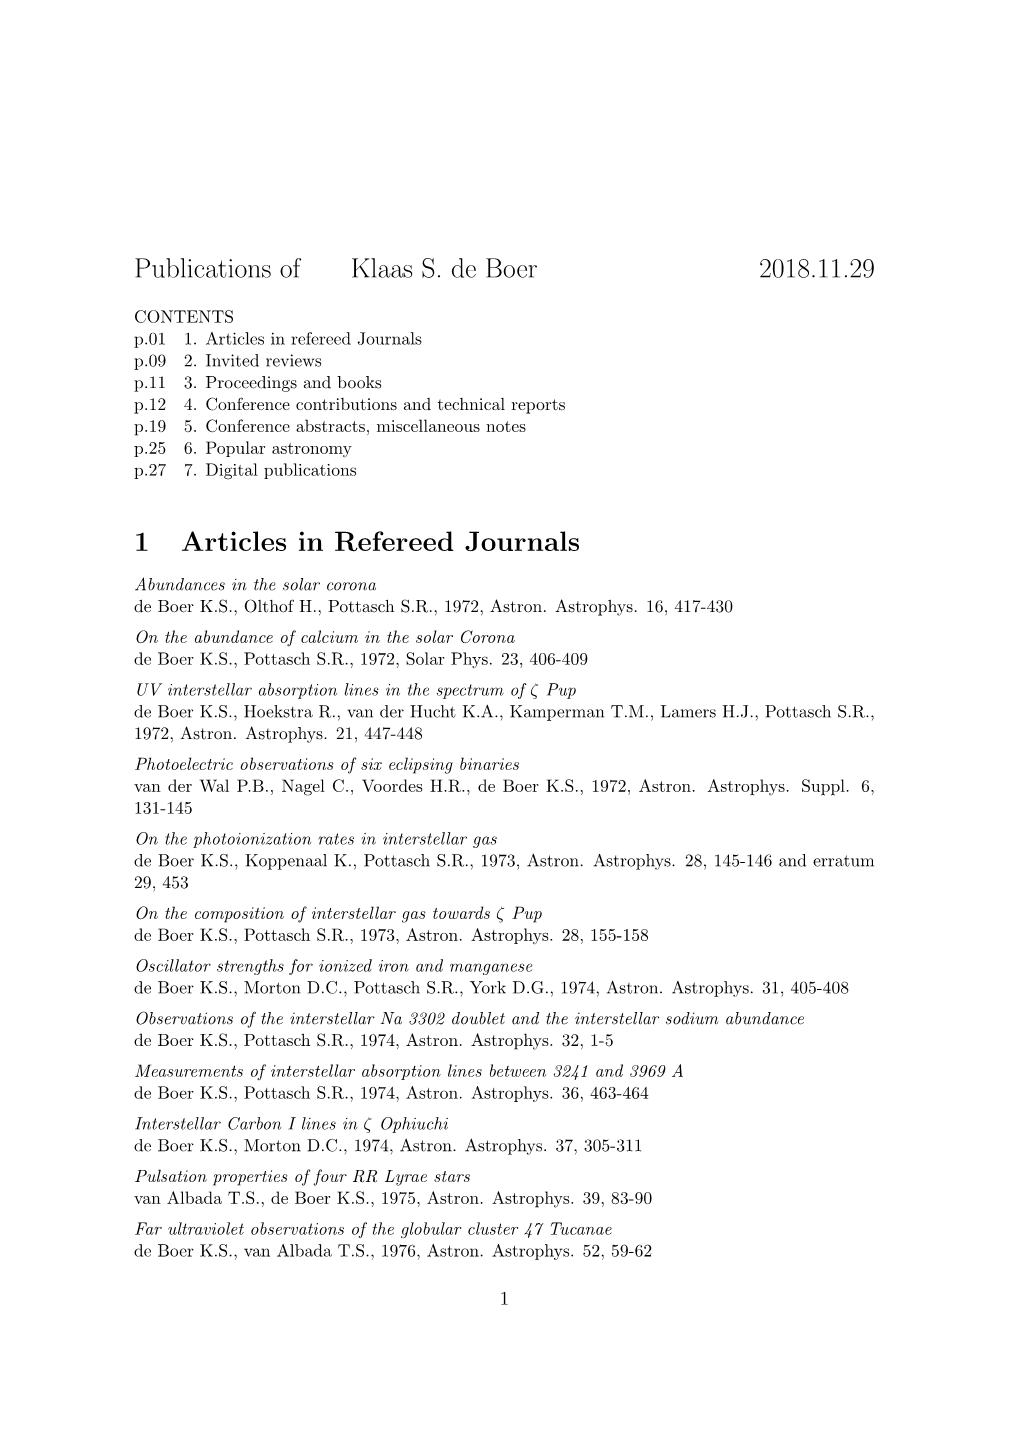 Publications of Klaas S. De Boer 2018.11.29